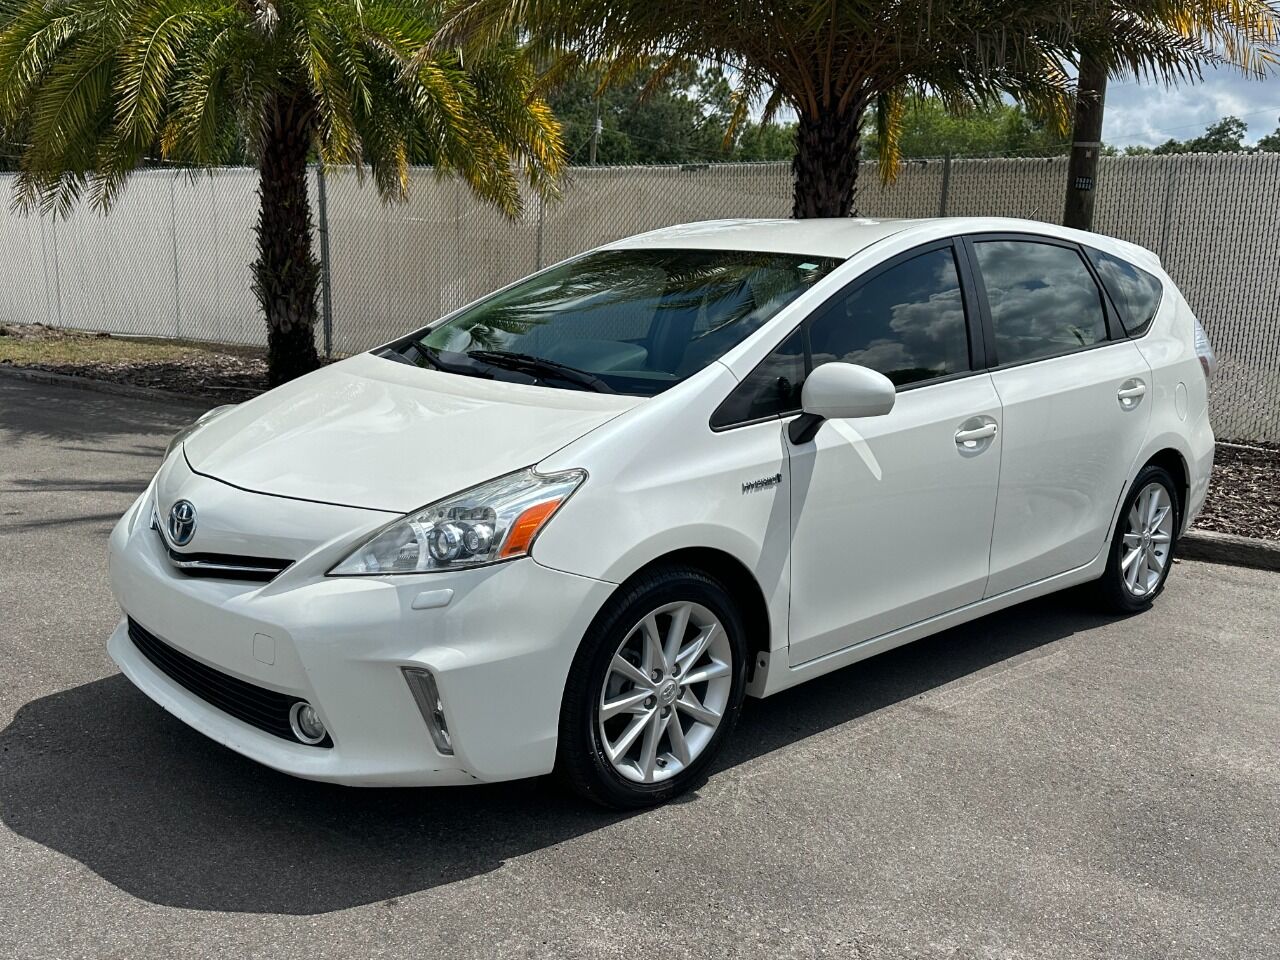 Toyota Prius v For Sale In Florida - Carsforsale.com®